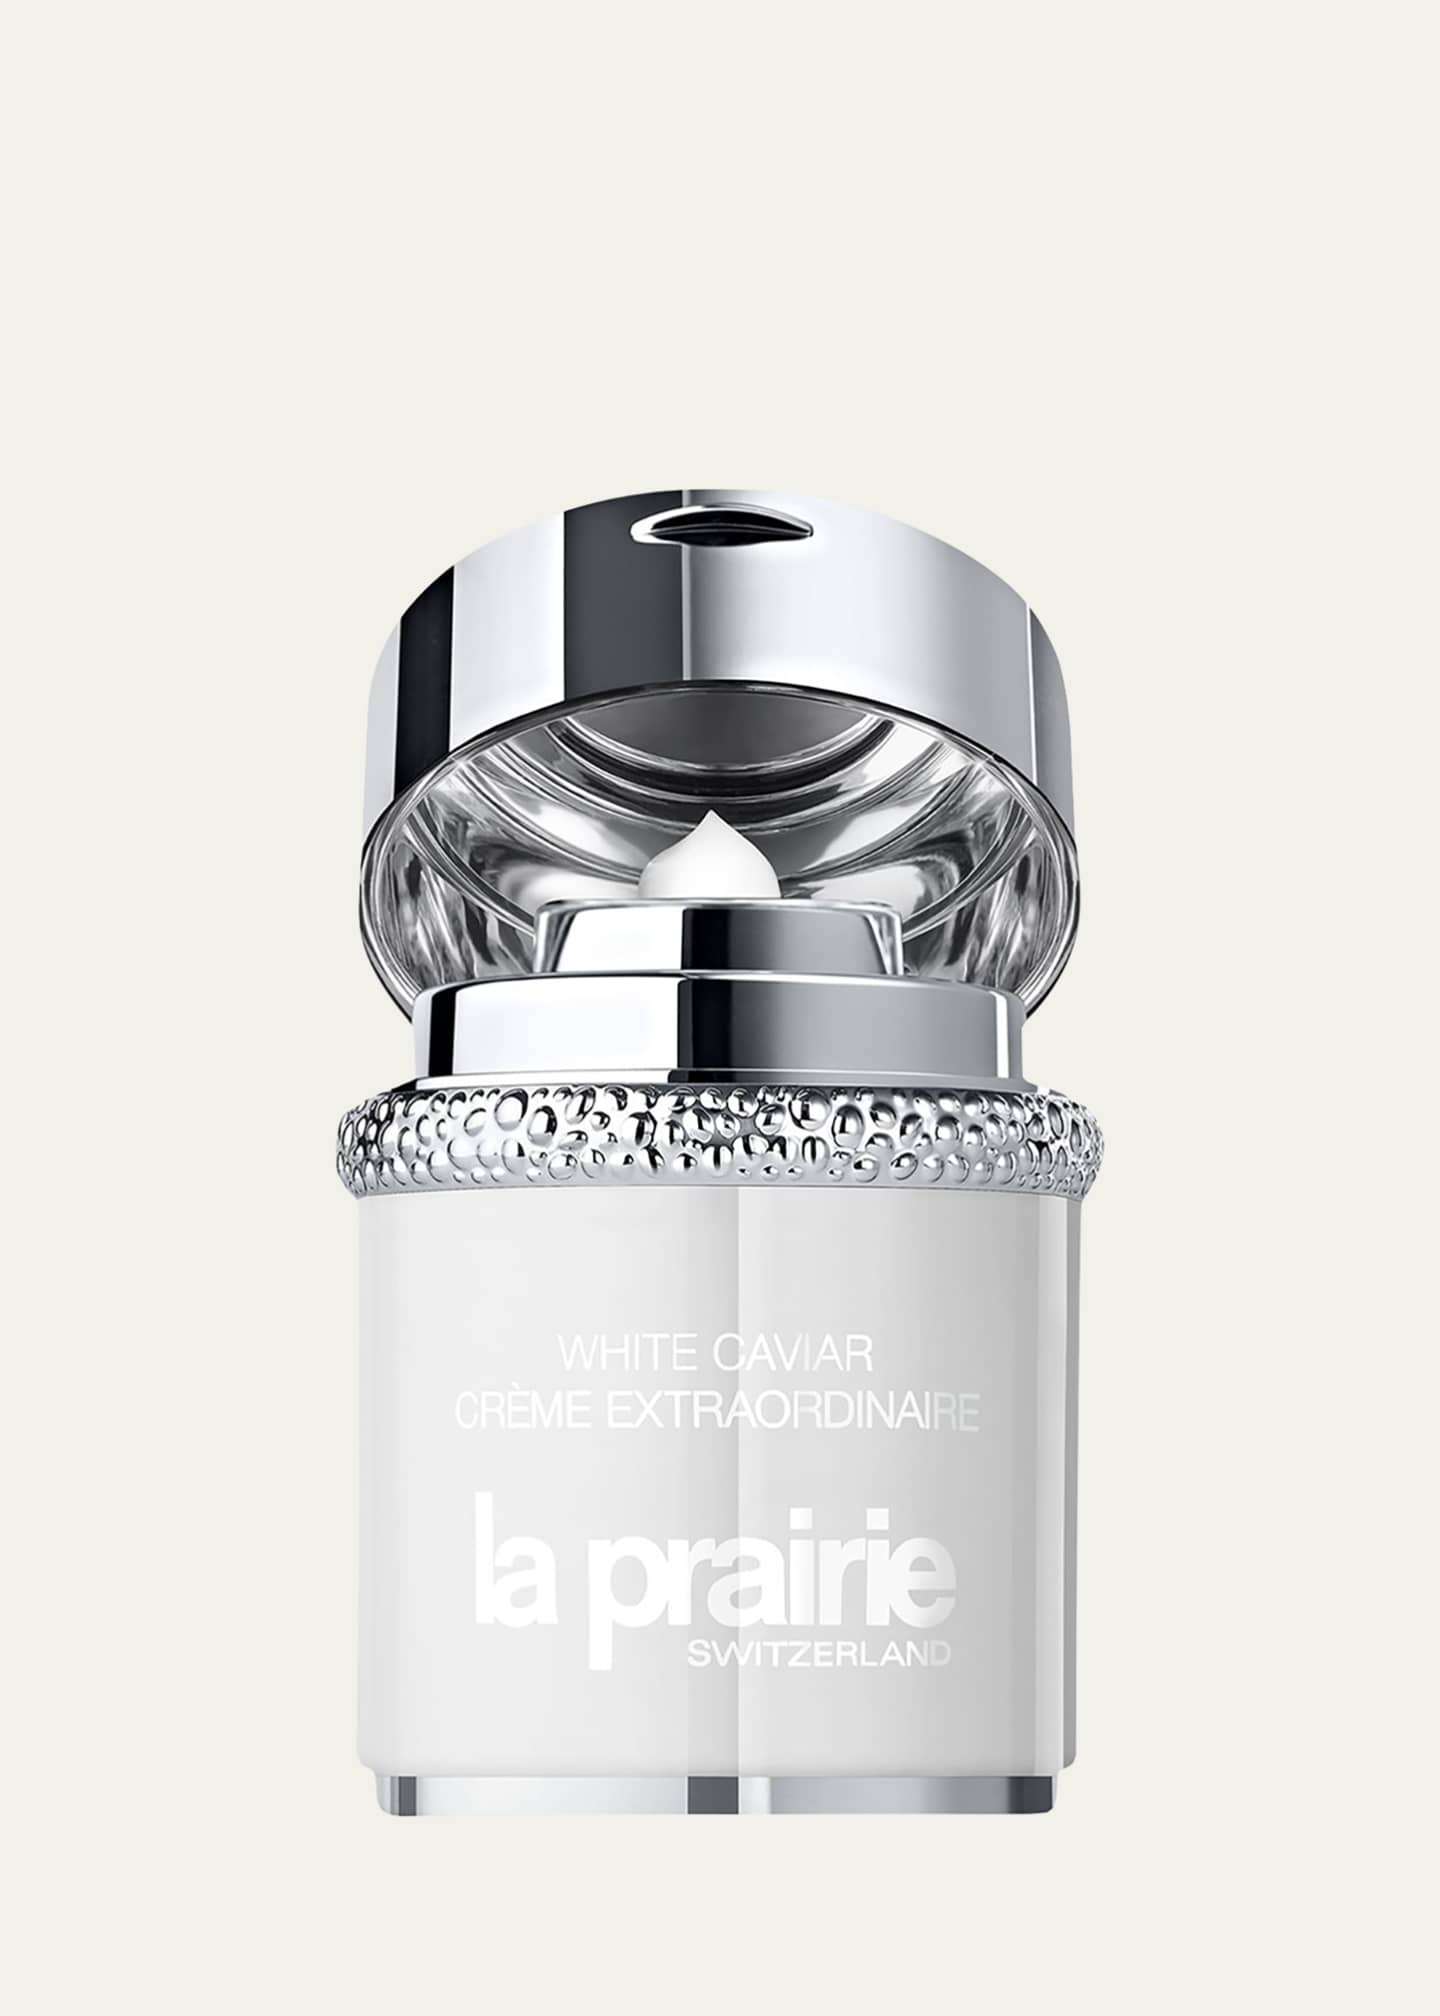 La Prairie 2 oz. White Caviar Creme Extraordinaire Illuminating Face Cream Image 1 of 4